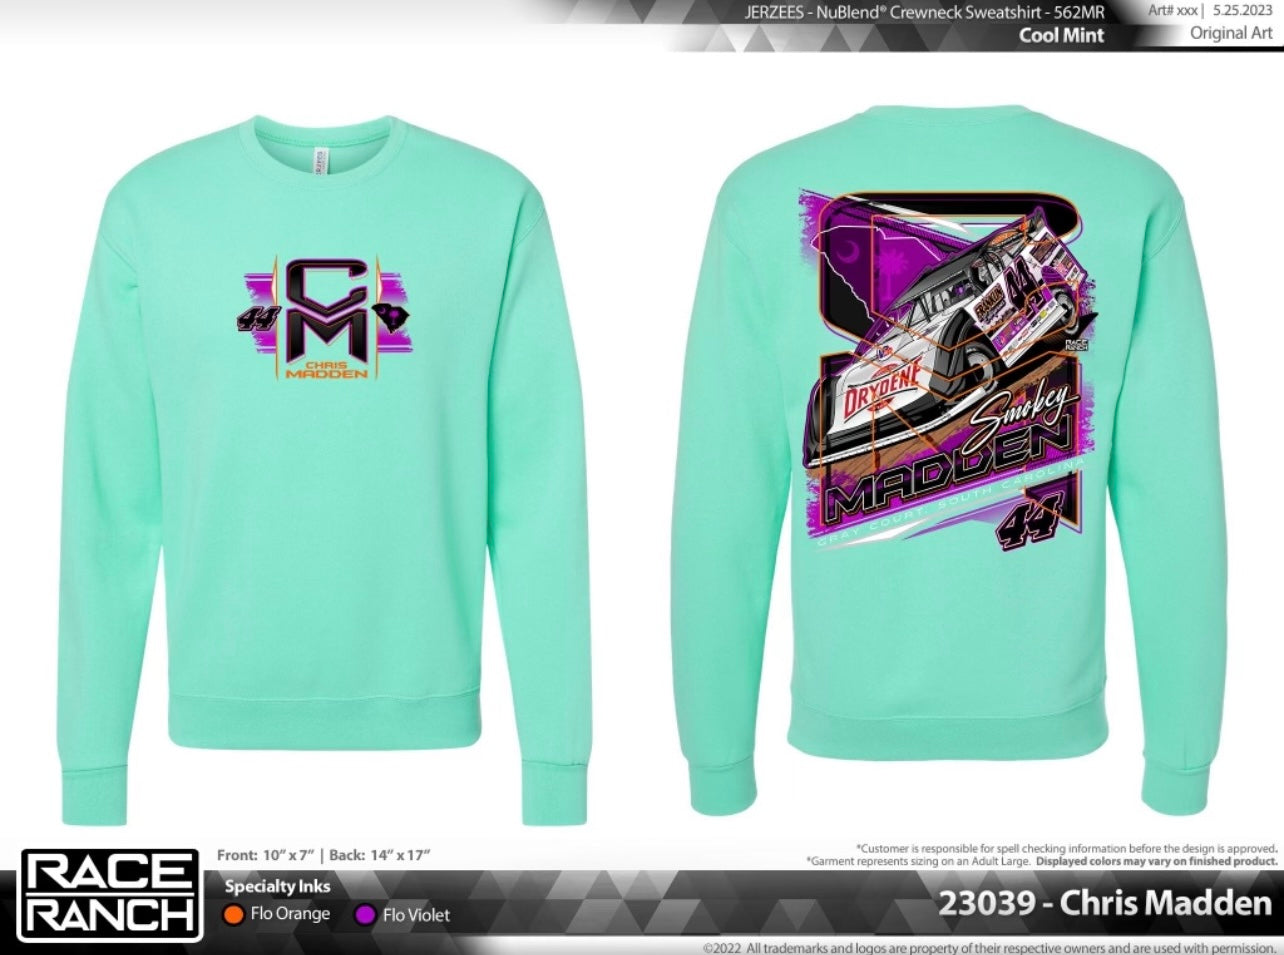 Awesome chris sale 2023 shirt, hoodie, longsleeve tee, sweater